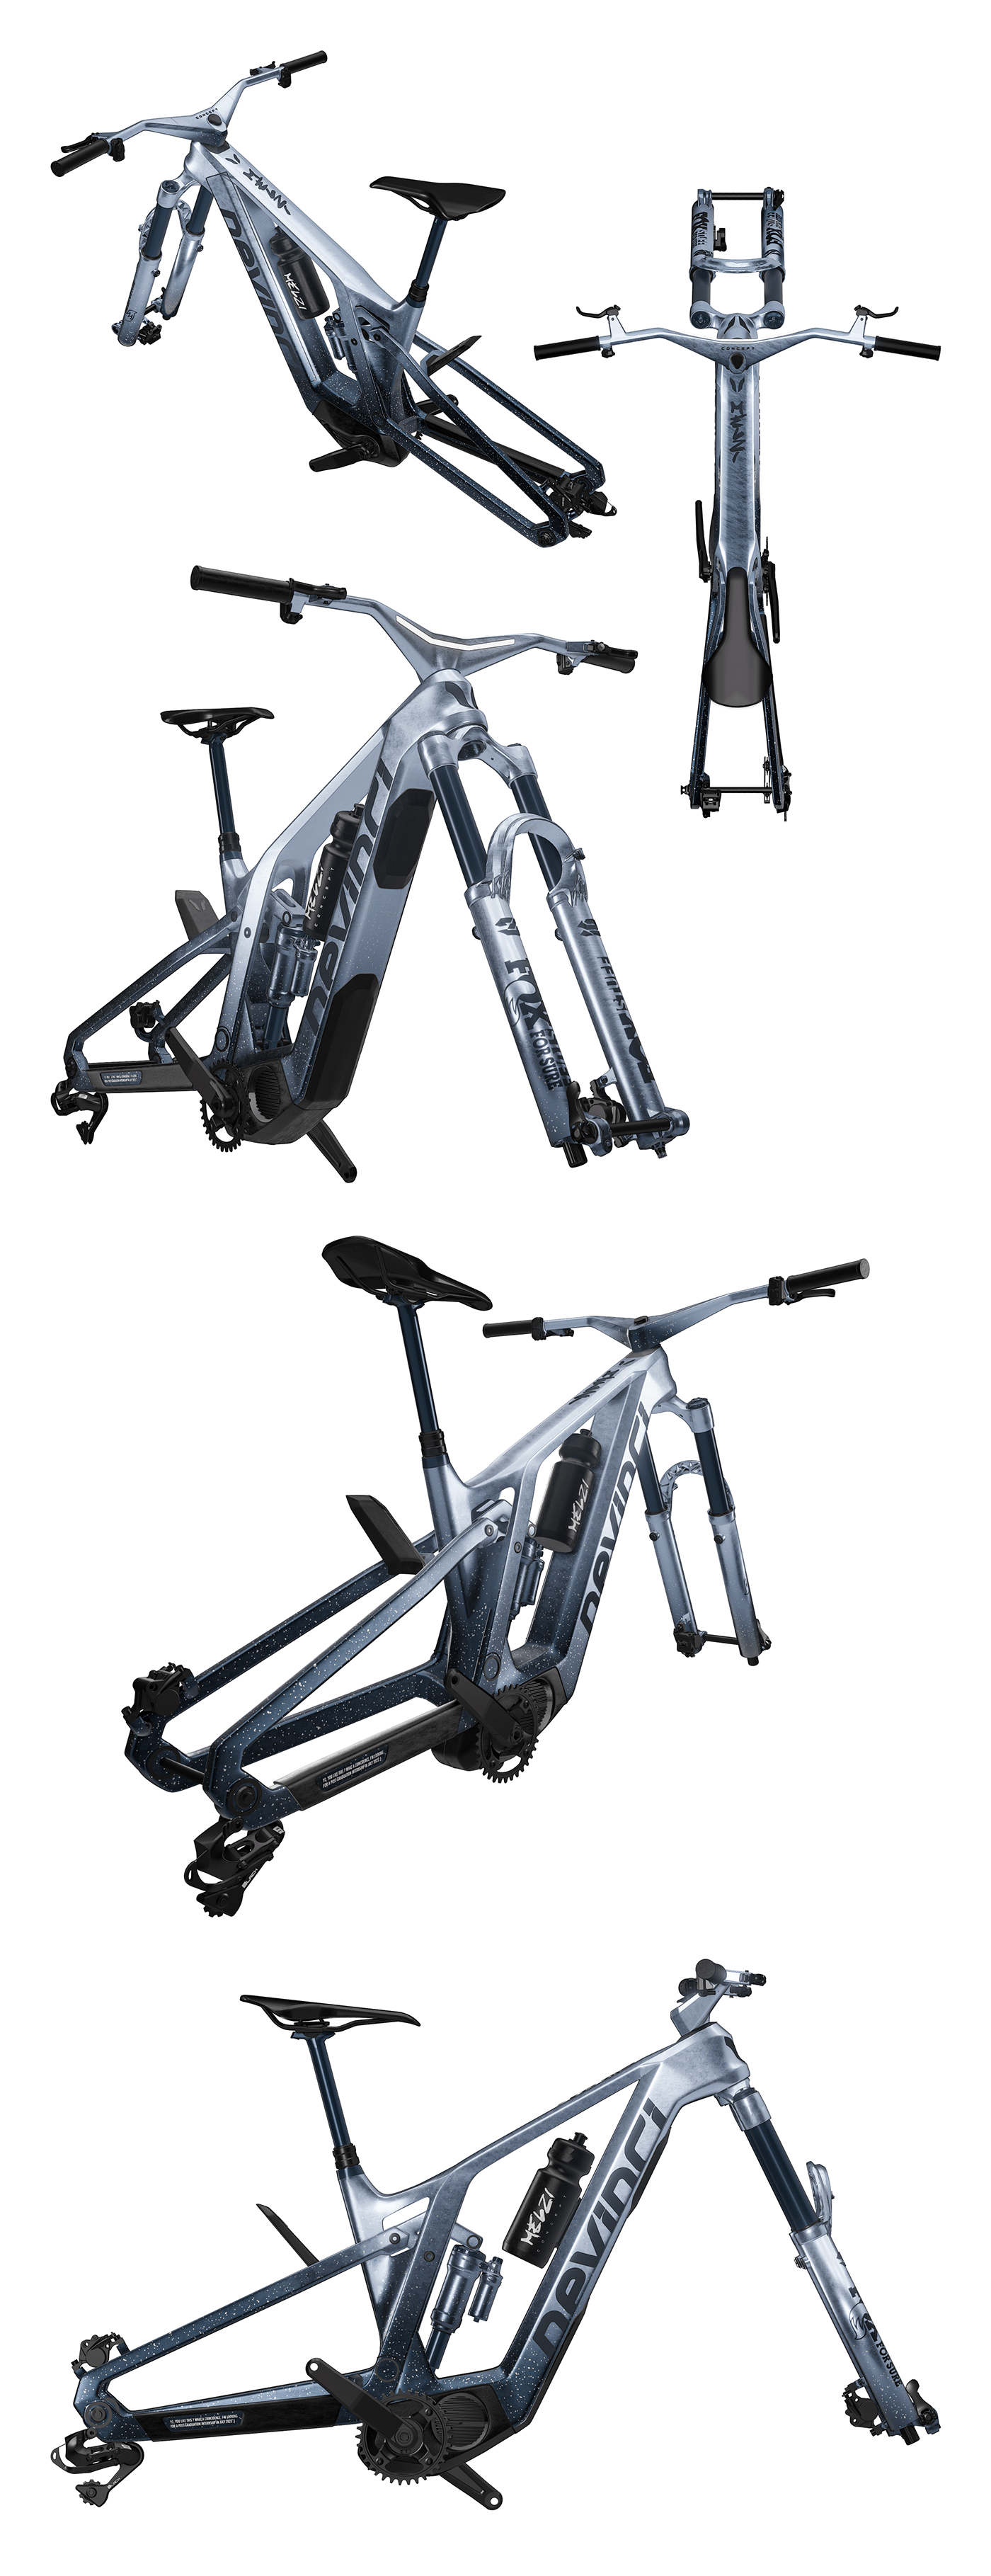 3D Bicycle design devinci E-MTB melzi mountain bike MTB transportation Vehicle